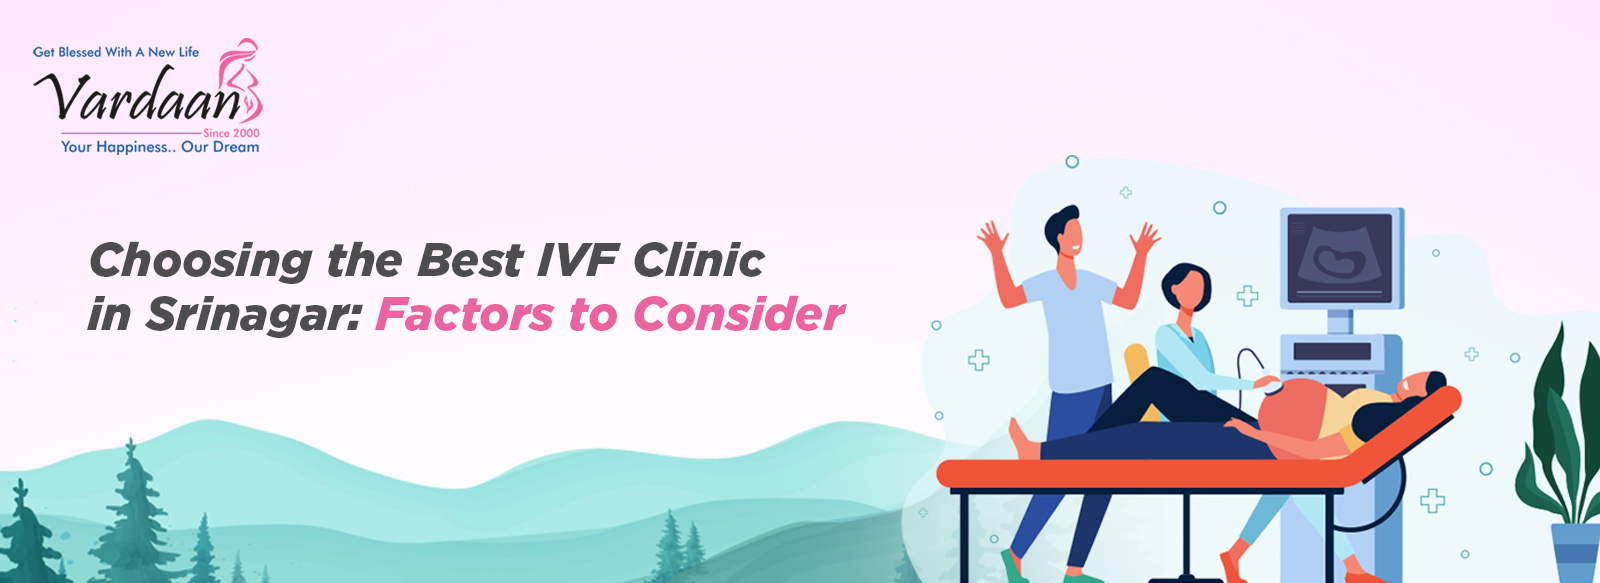 Choosing the Best IVF Clinic in Srinagar